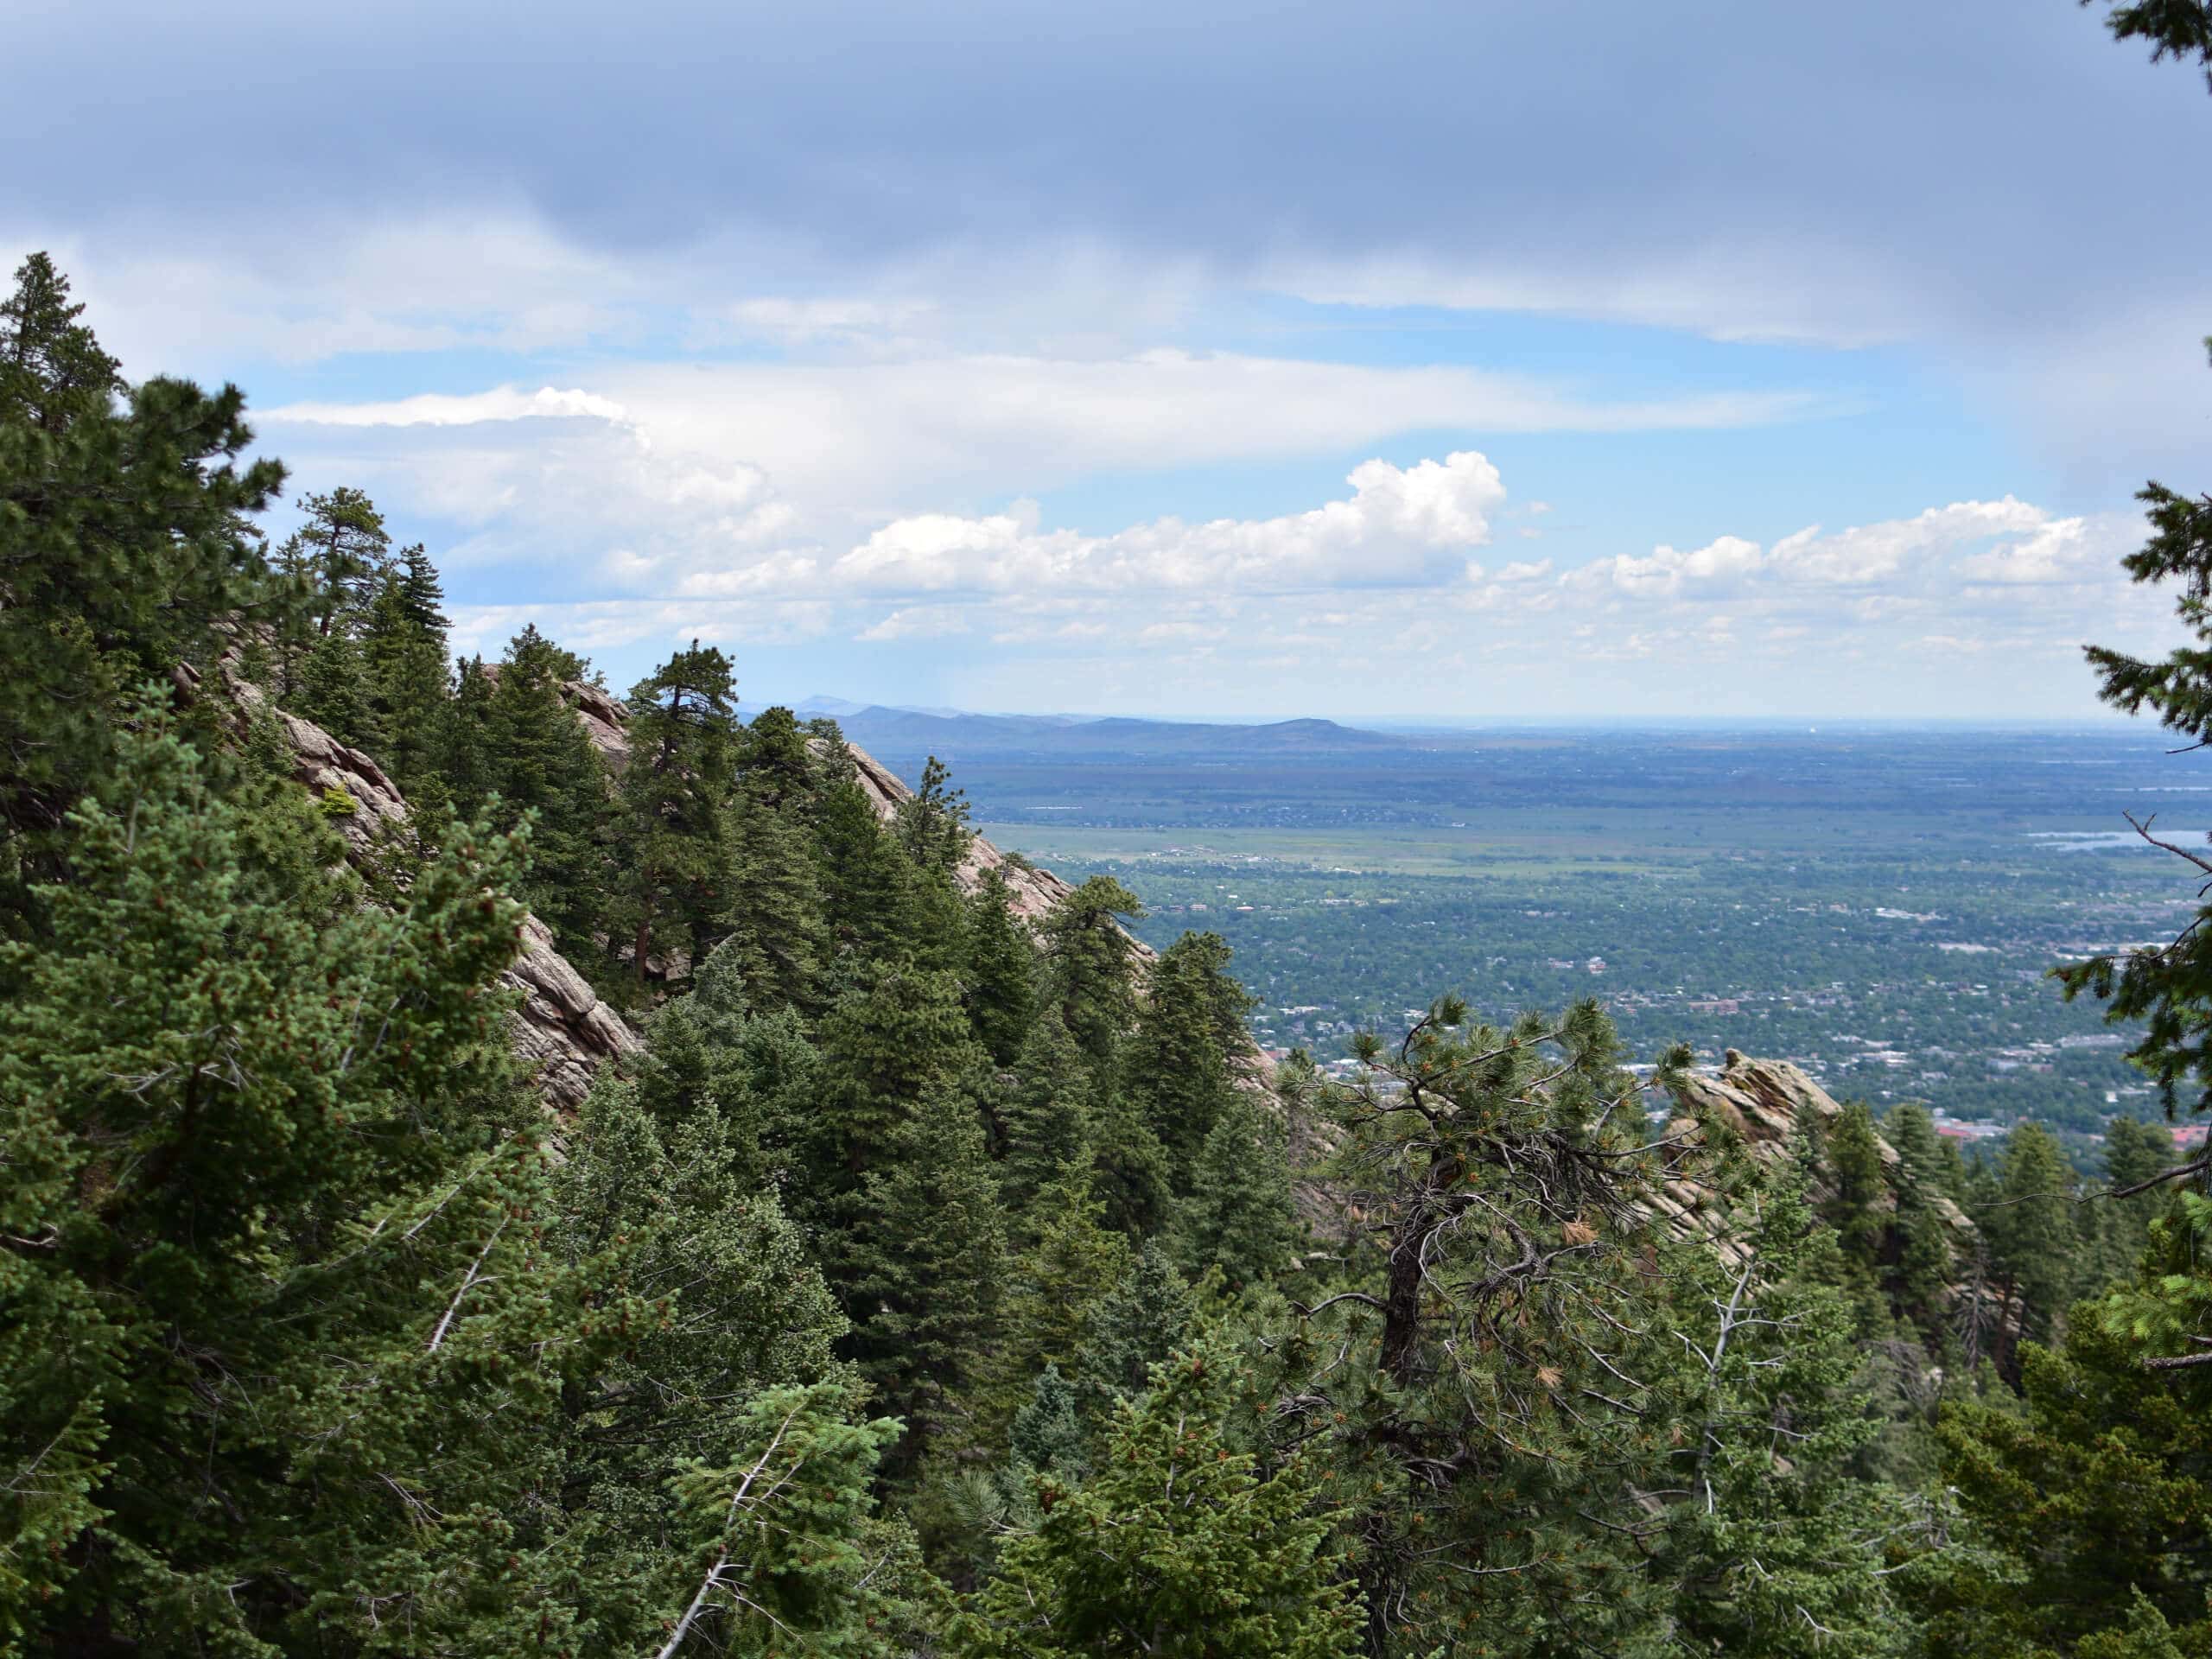 Boulder Viewpoint Trail